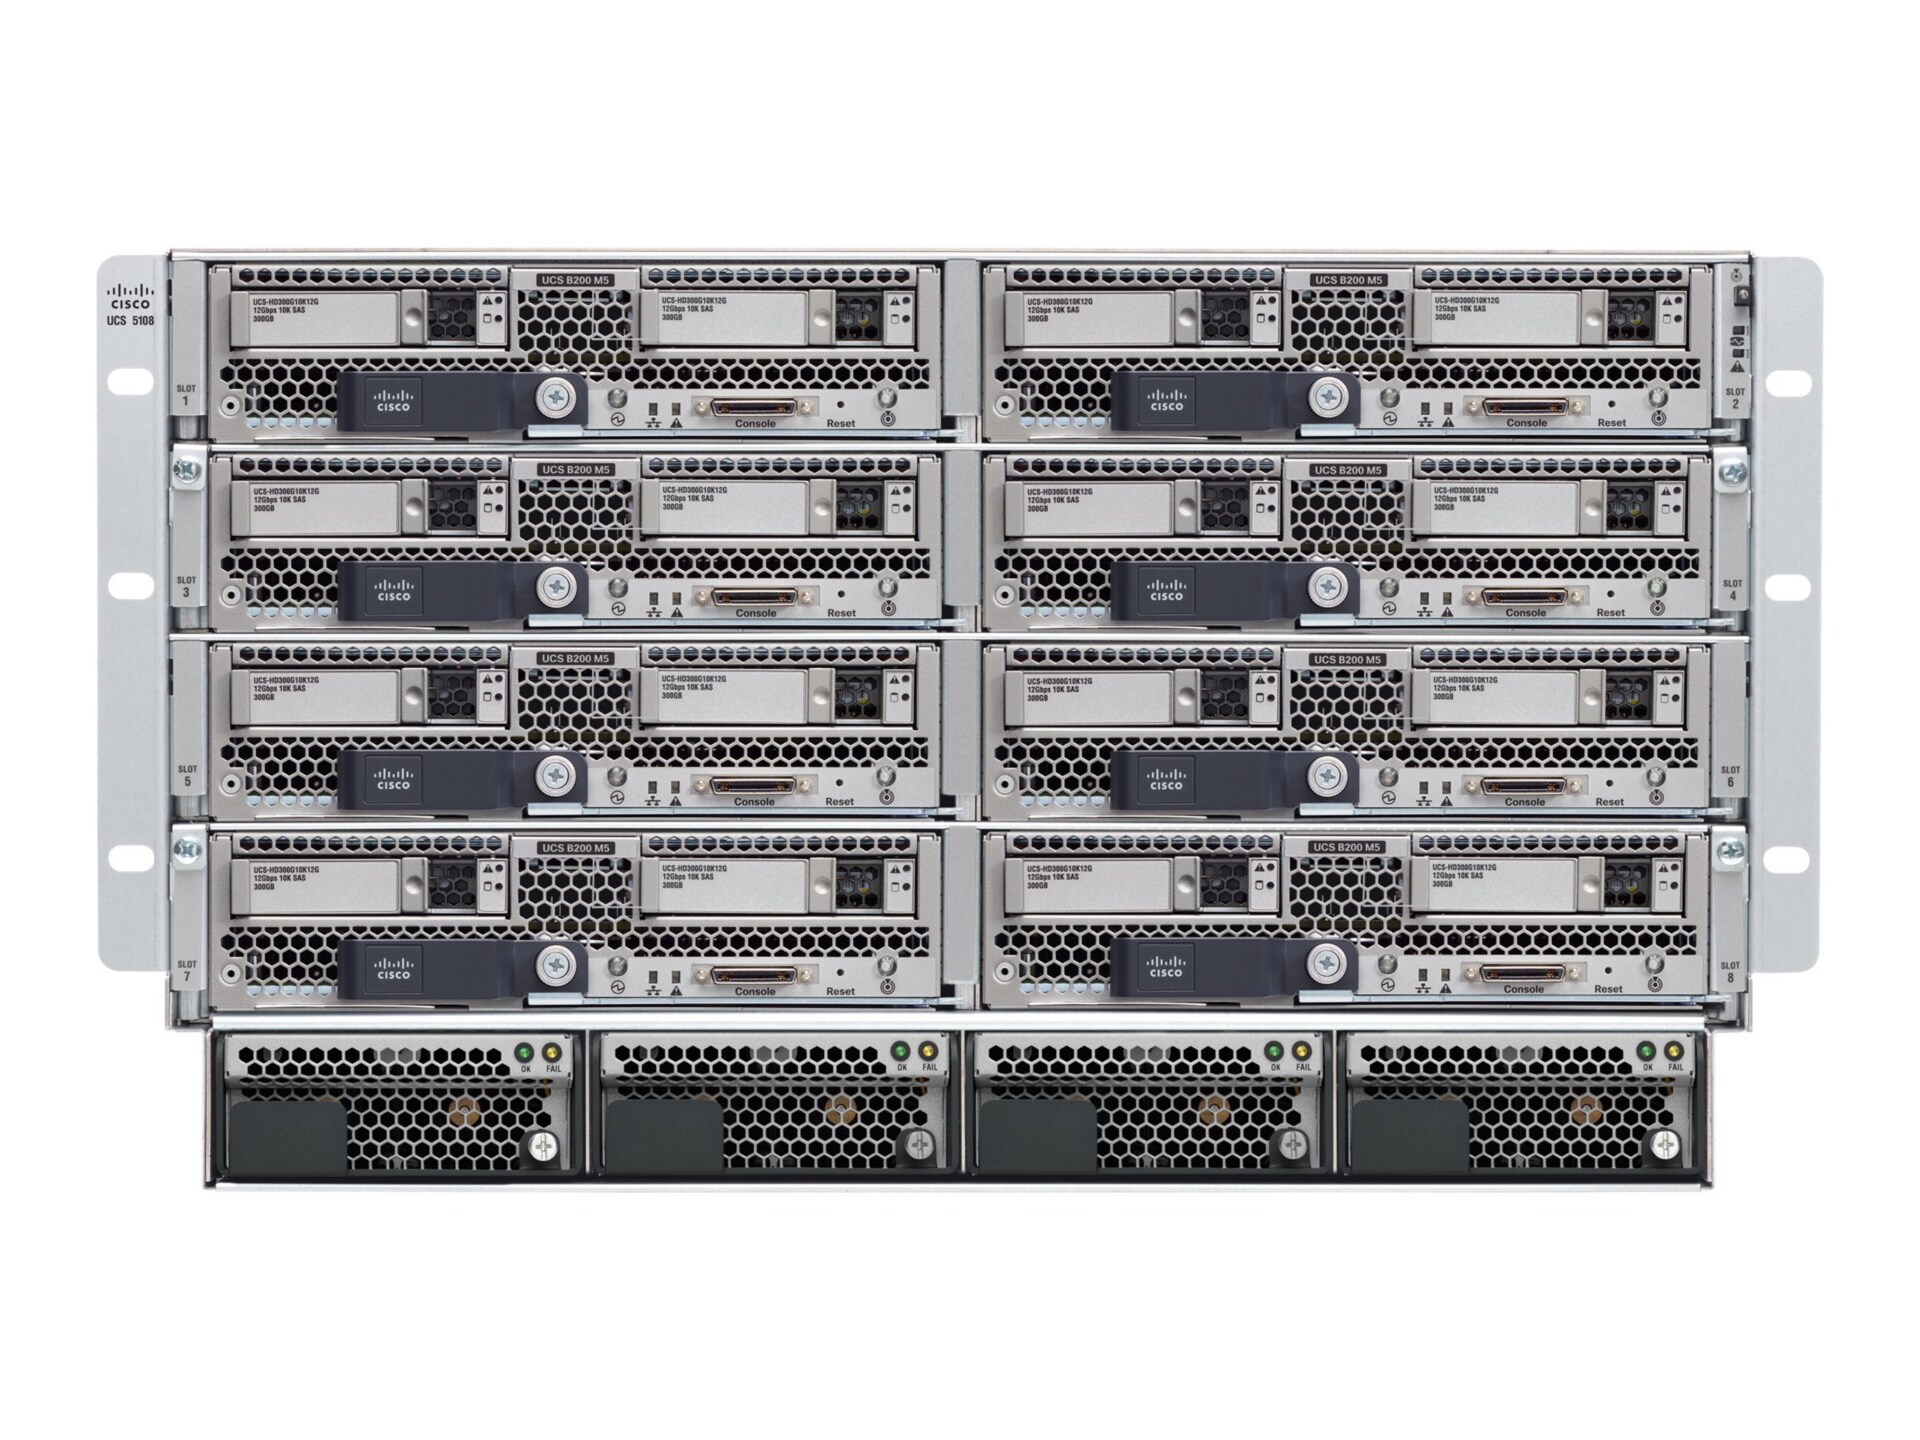 Cisco Ucs 5108 Blade Server Chassis Rack Mountable 6u Up To 8 Blades Ucs Ez Infra Chss Servers Cdw Com